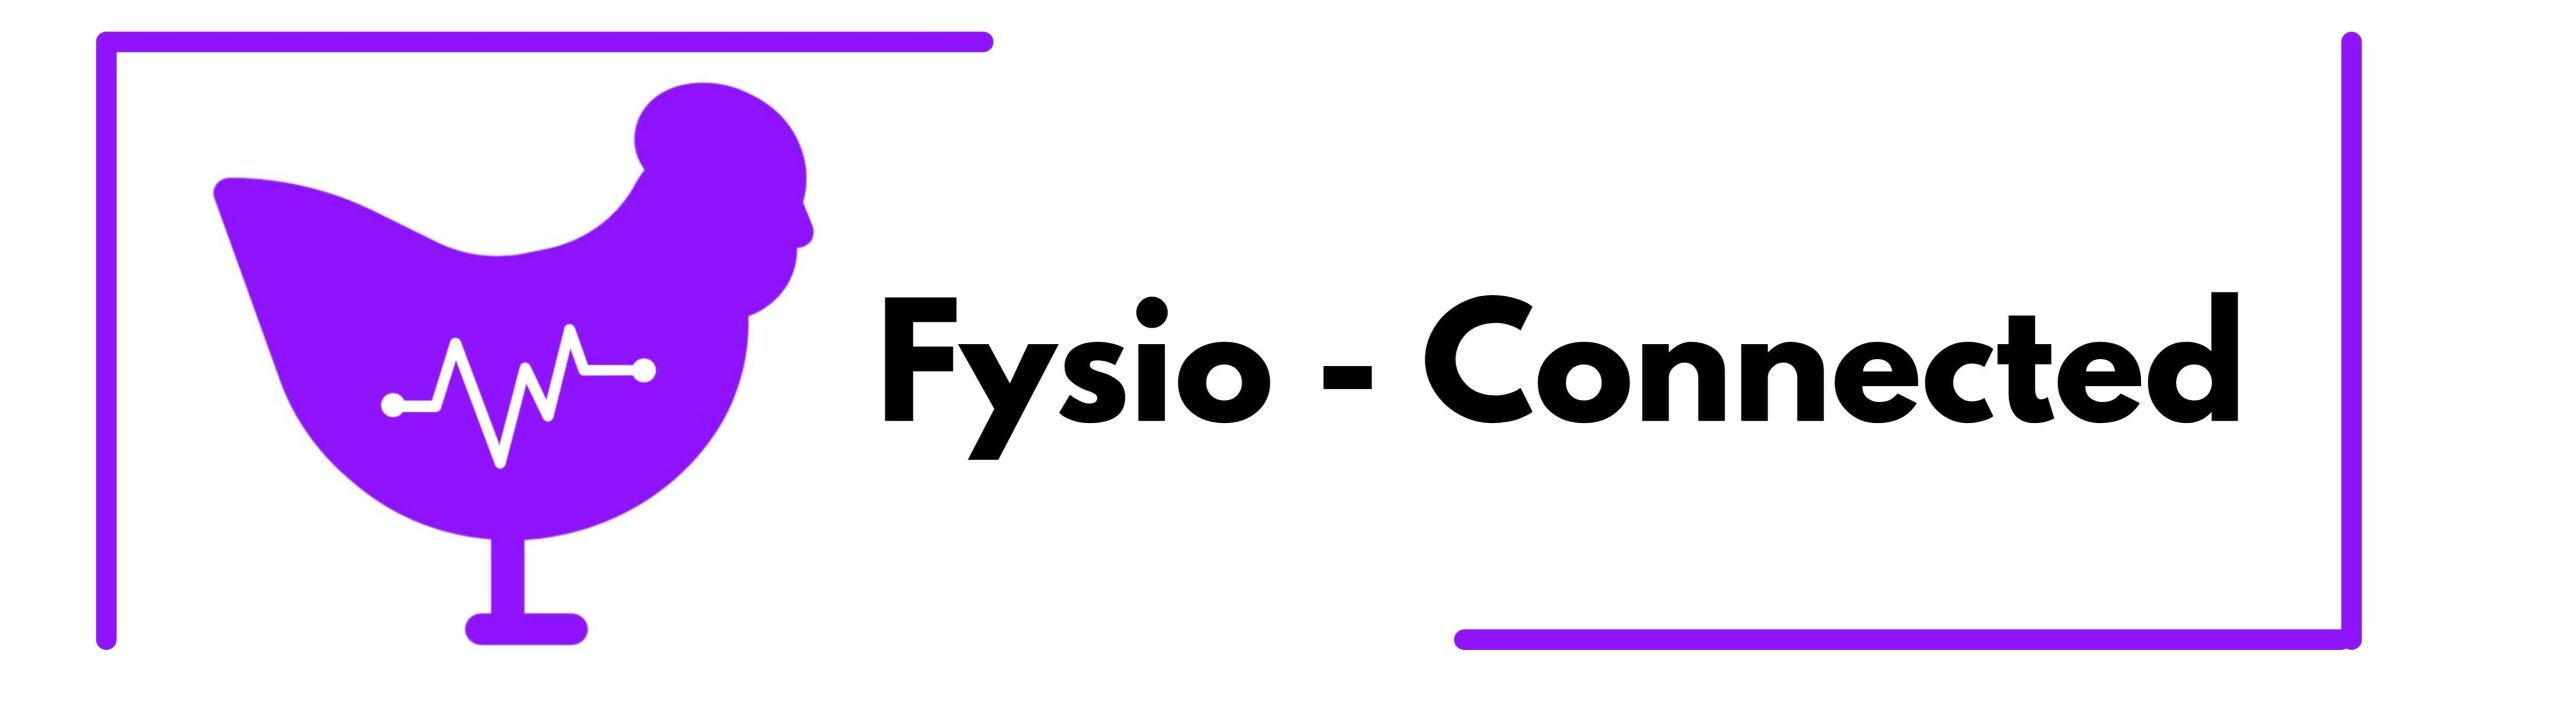 Fysio connected logo